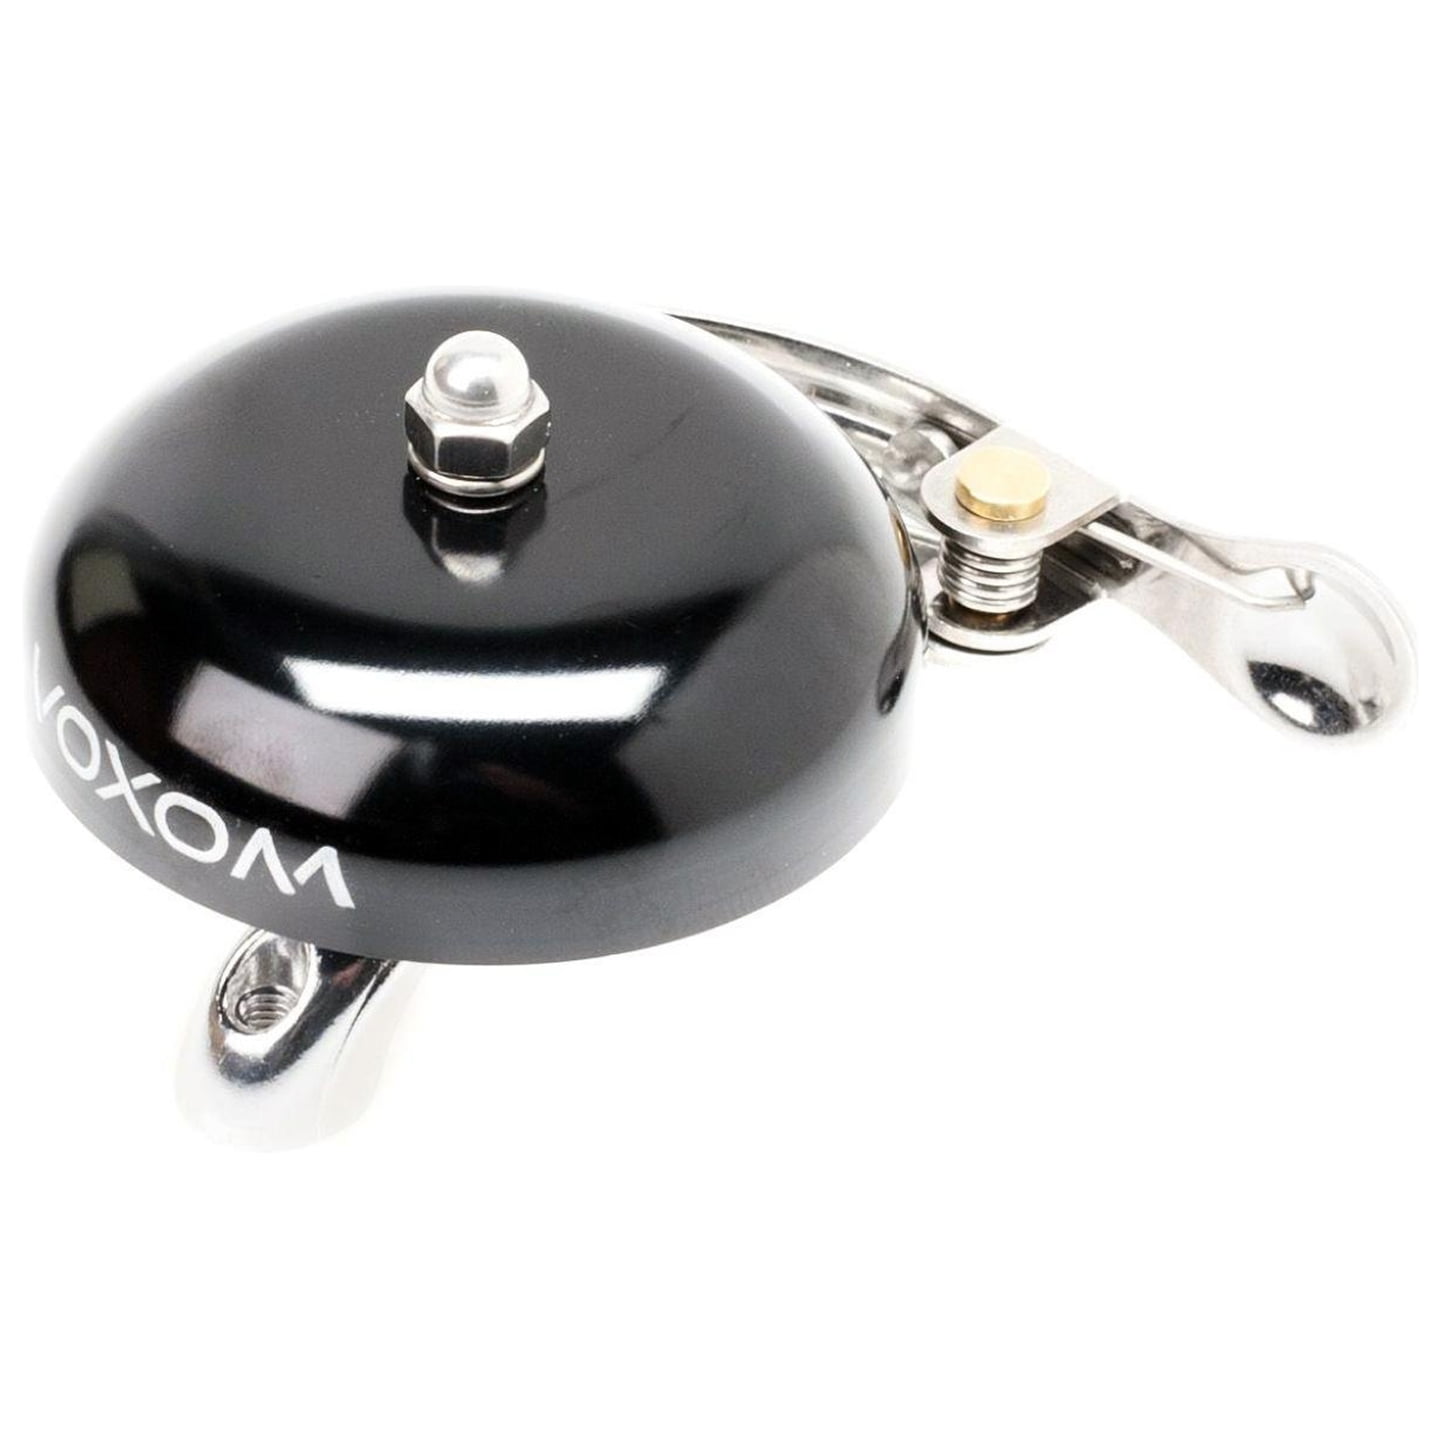 VOXOM Portland Kl4 Bell, Bike accessories